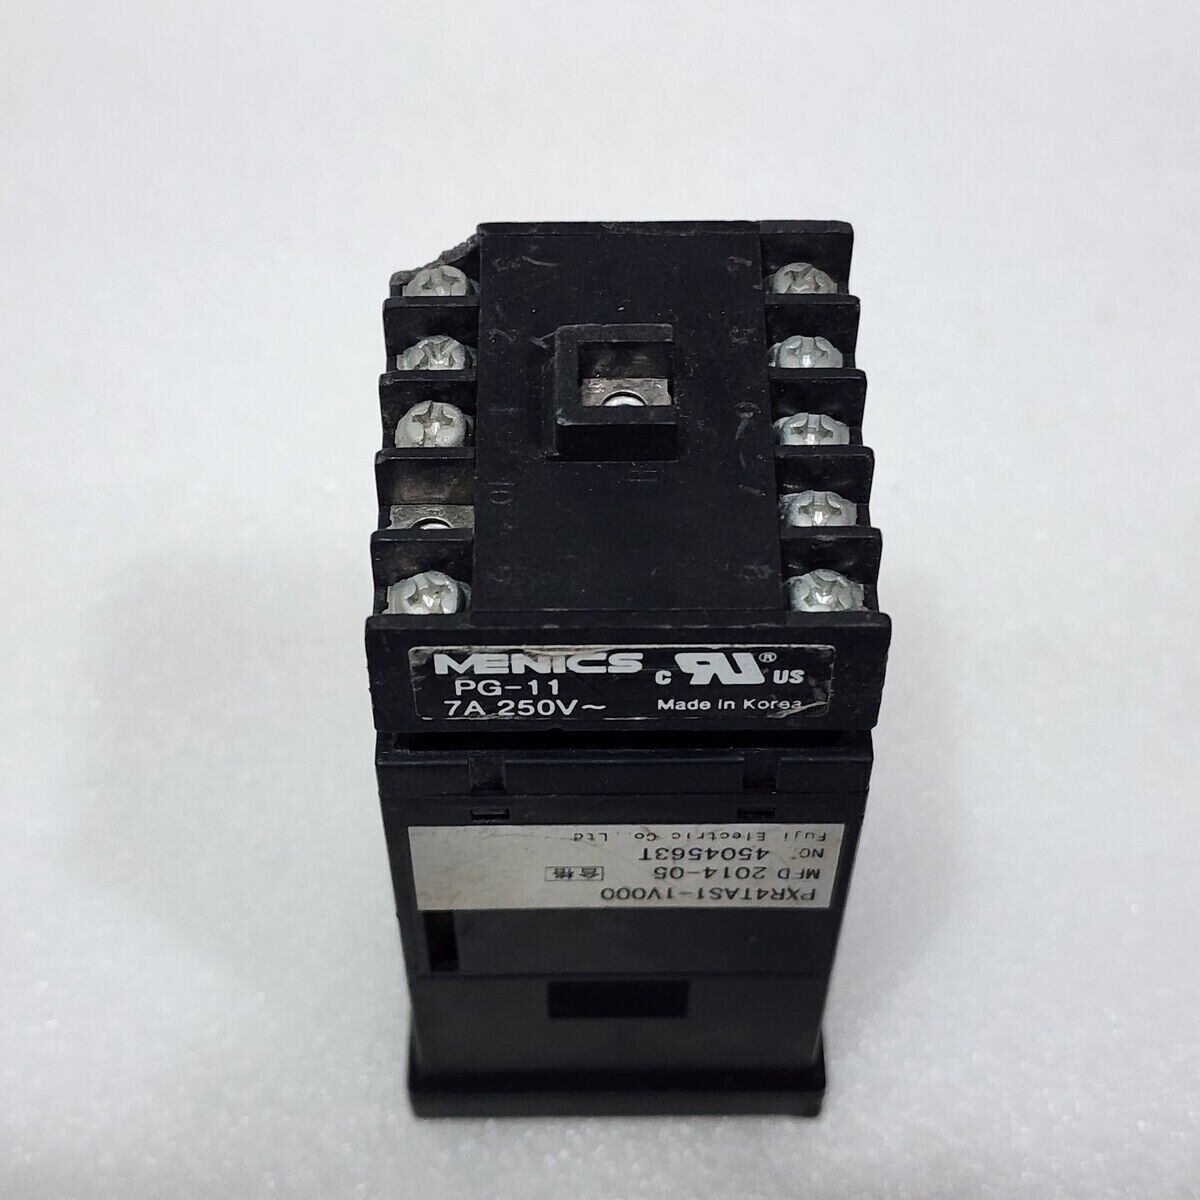 FUJI ELECTRIC PXR4TAS1-1V000 DIGITAL TEMPERATURE CONTROLLER